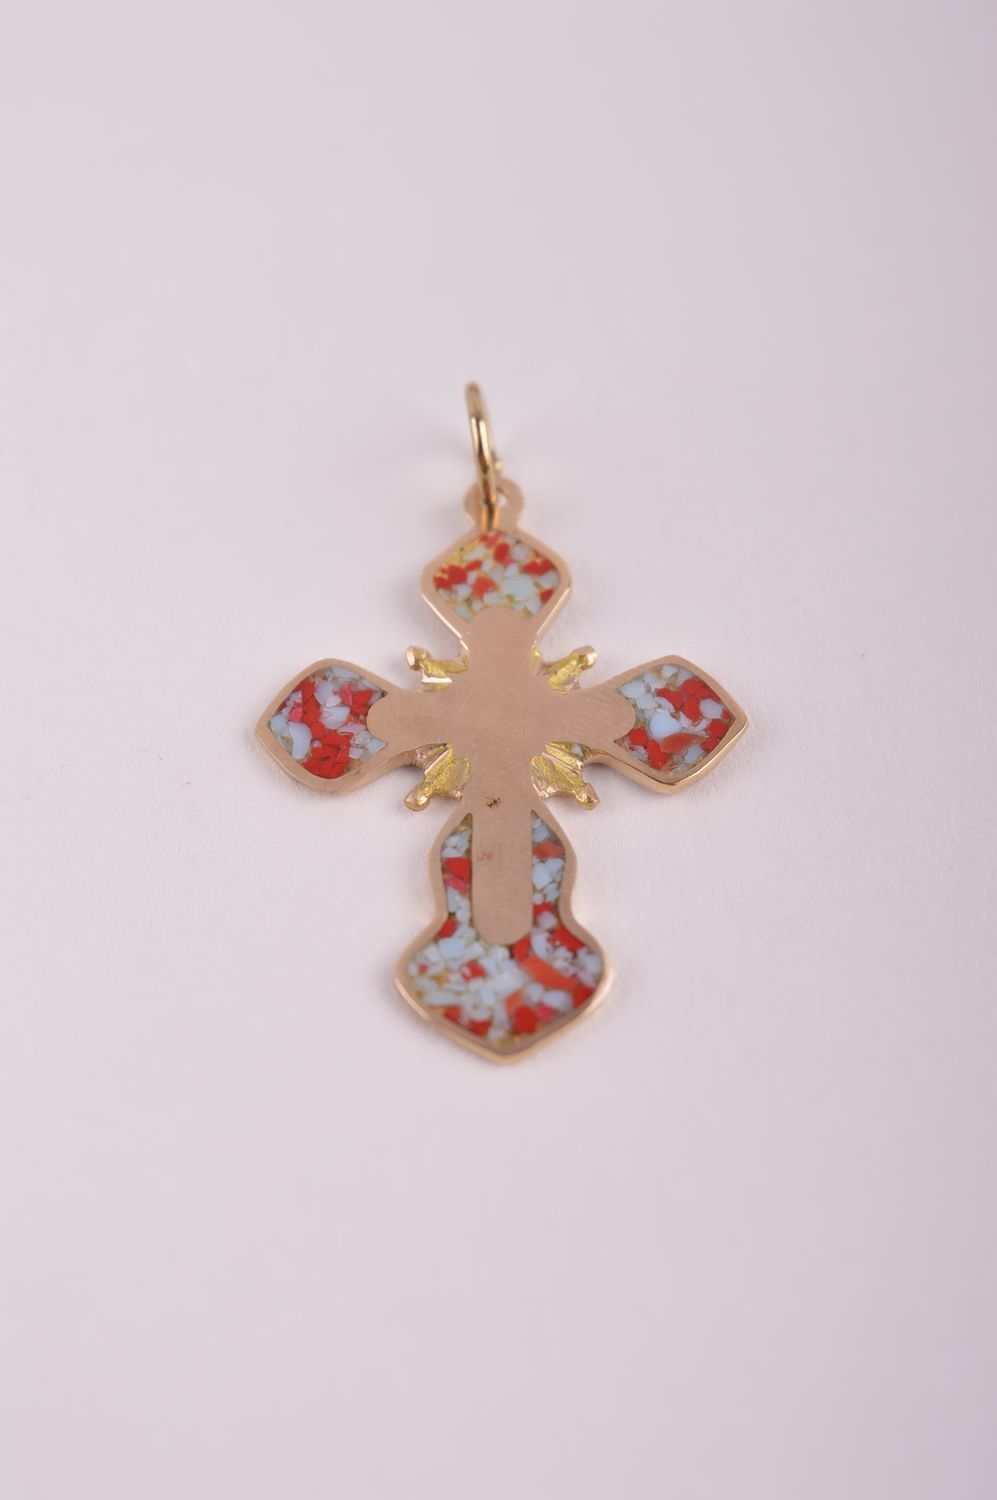 Unusual handmade brass cross pendant gemstone pendant cross jewelers ideas photo 2